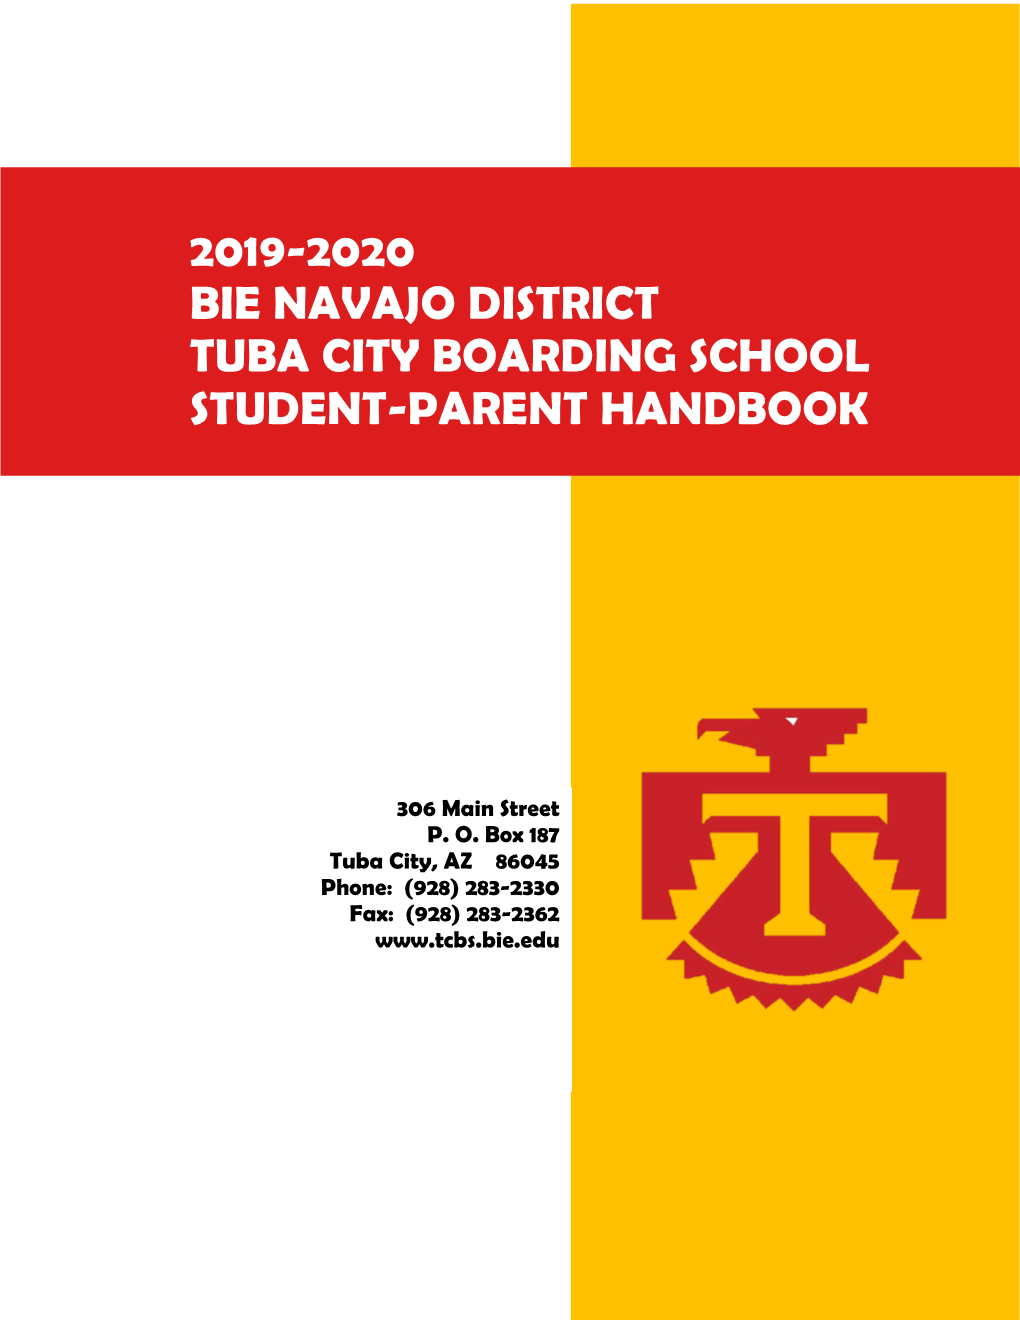 2019-2020 Bie Navajo District Tuba City Boarding School Student-Parent